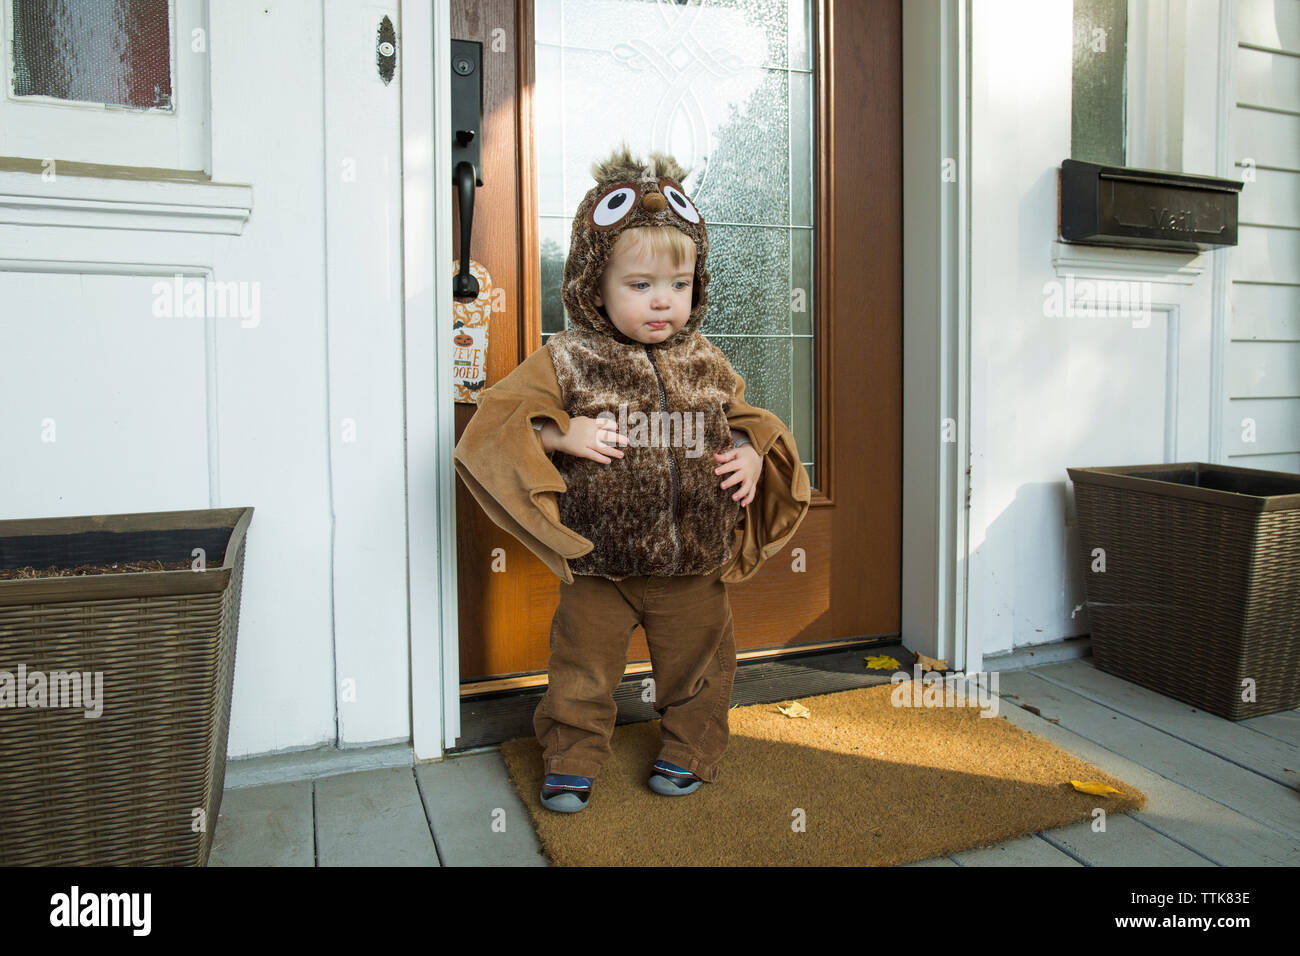 Toddler boy dressed in Halloween costume stands in front of doorway Stock Photo